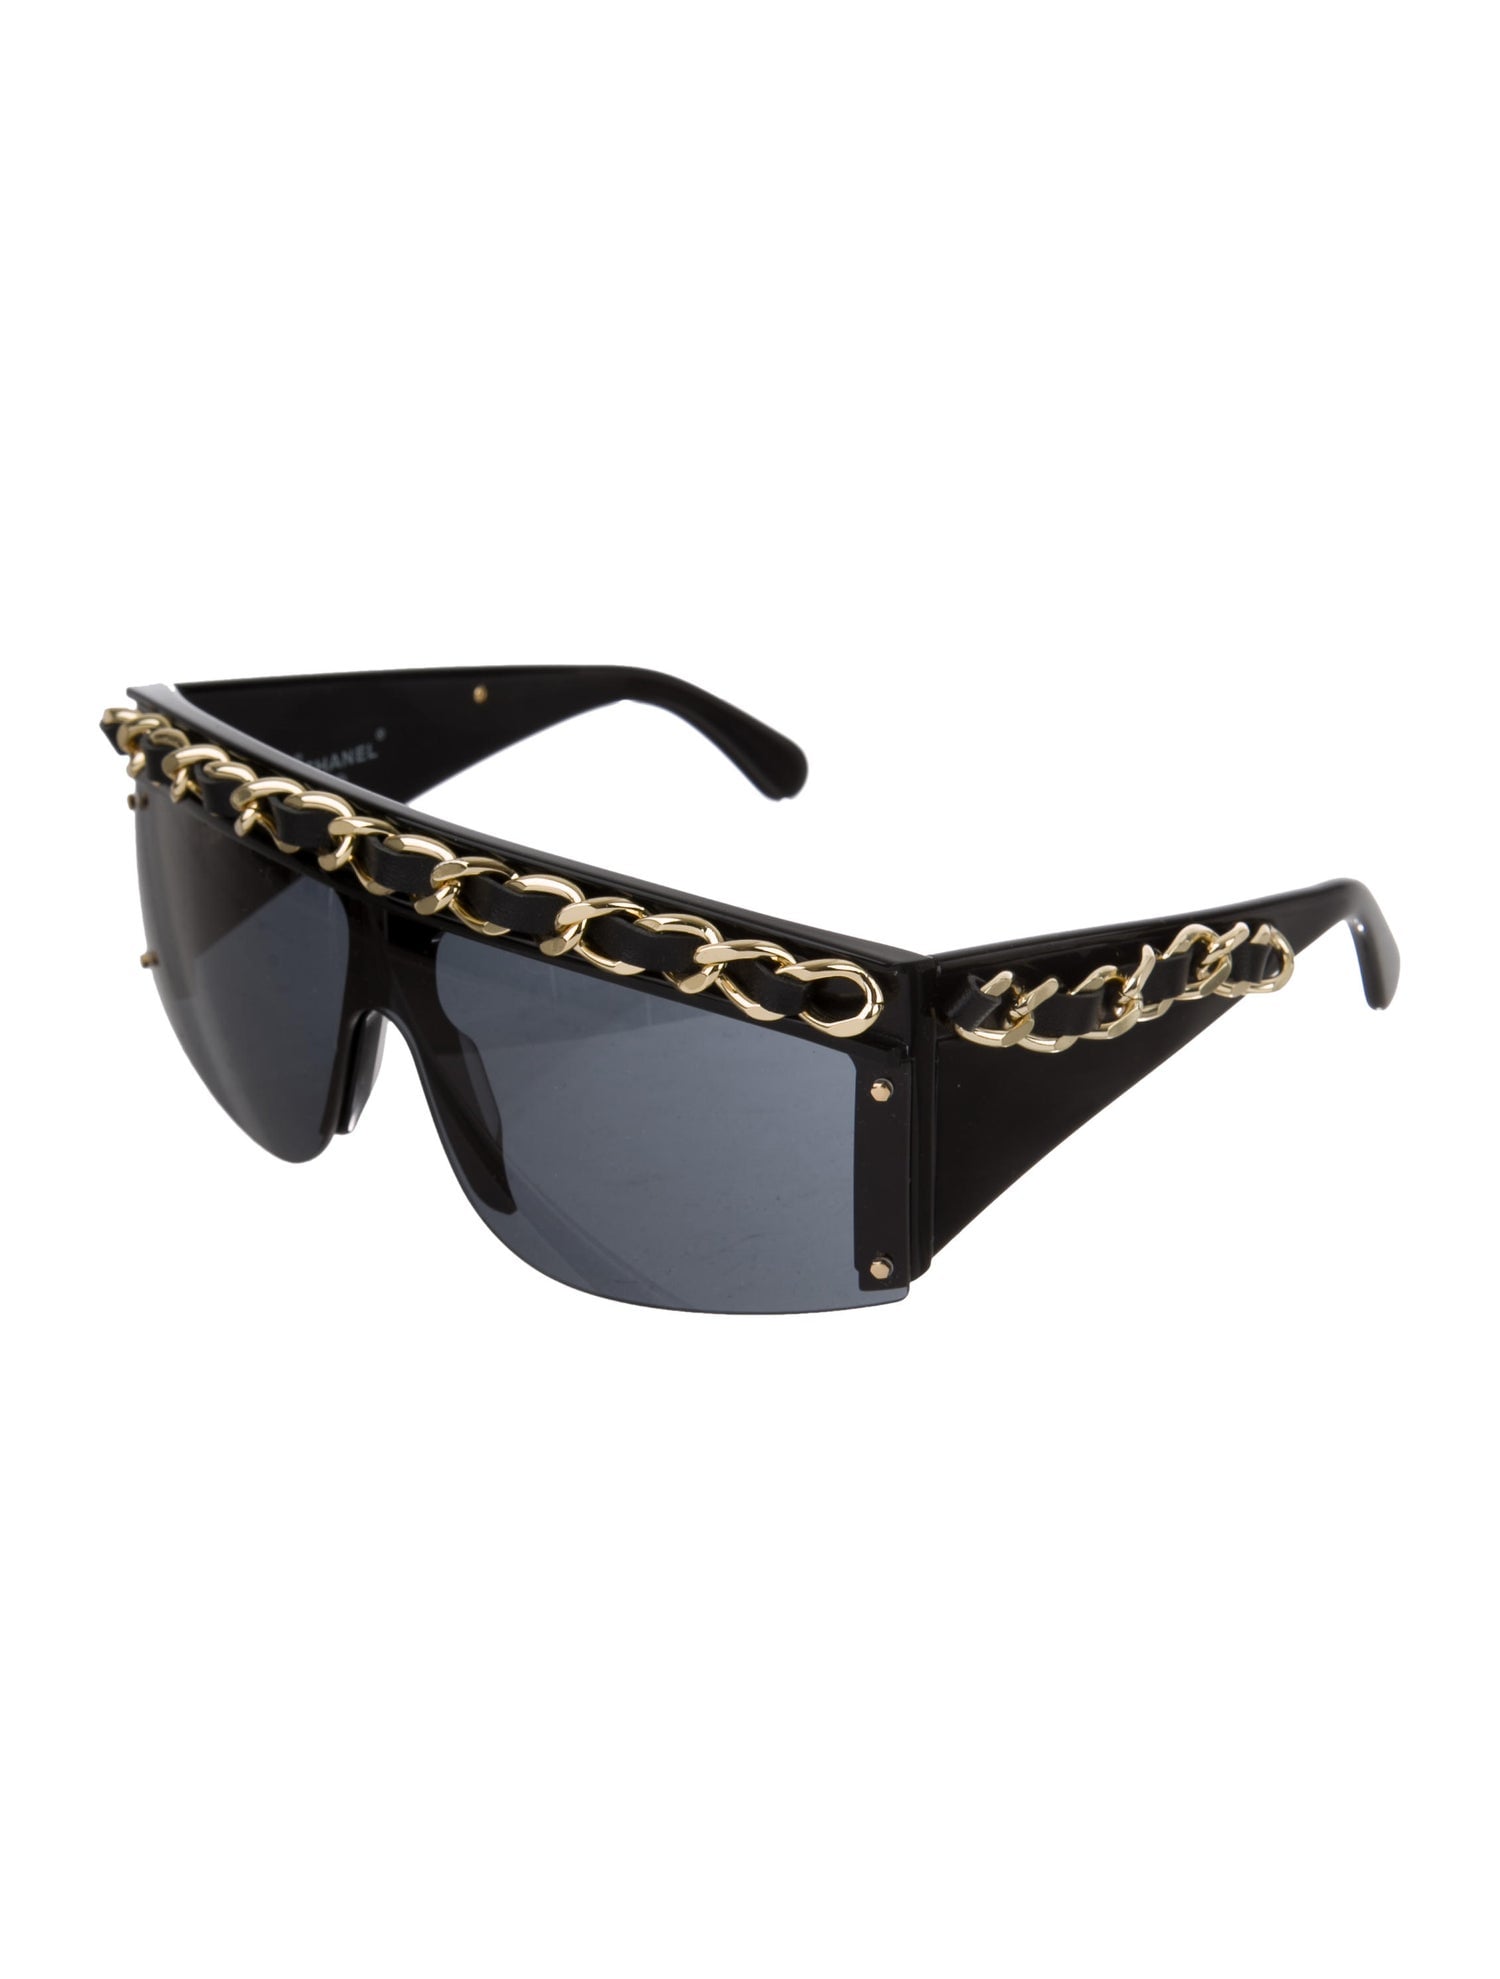 CHANEL CC Chain Sunglasses Eyewear Black Gold Plastic Vintage AK31766k   eBay